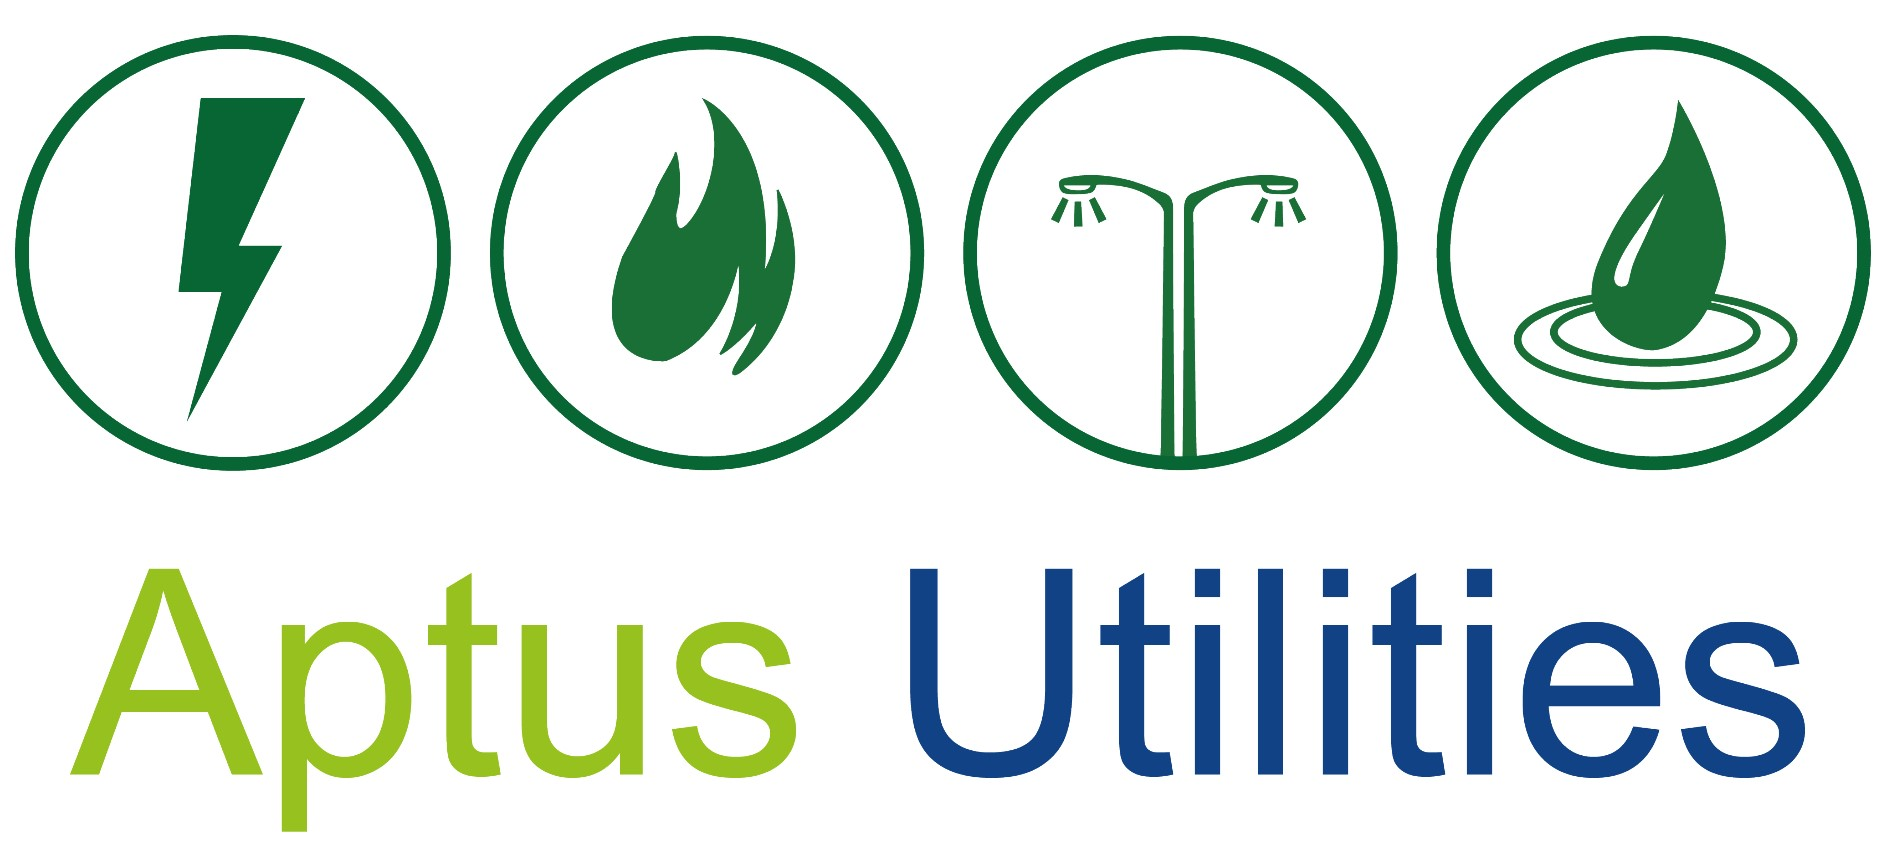 Aptus Utilities Ltd